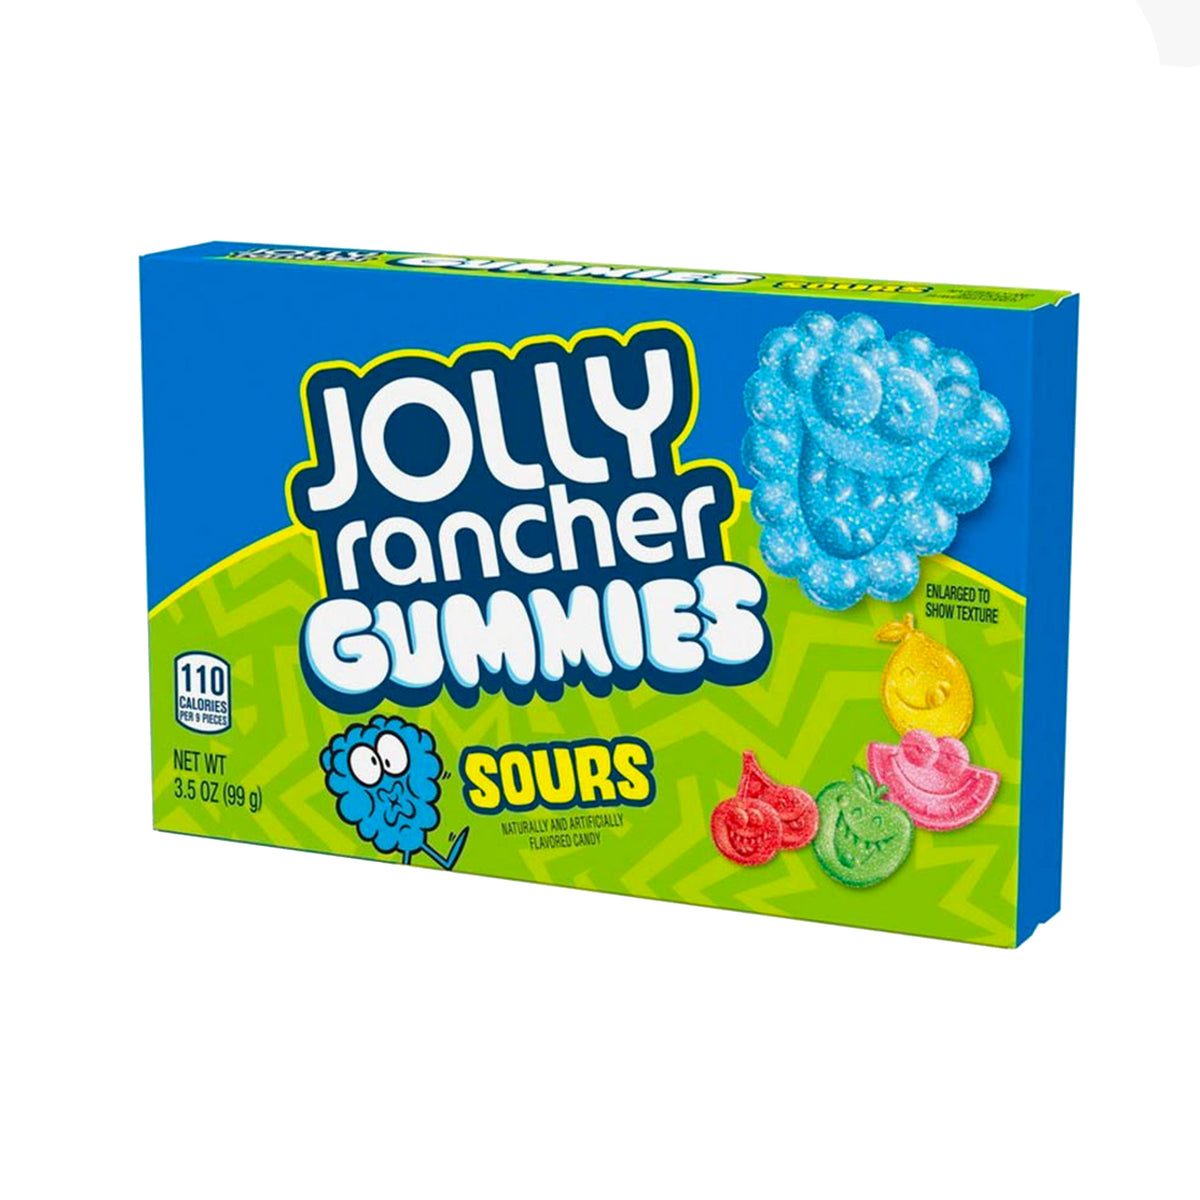 Jolly Rancher Gummies Sours Box